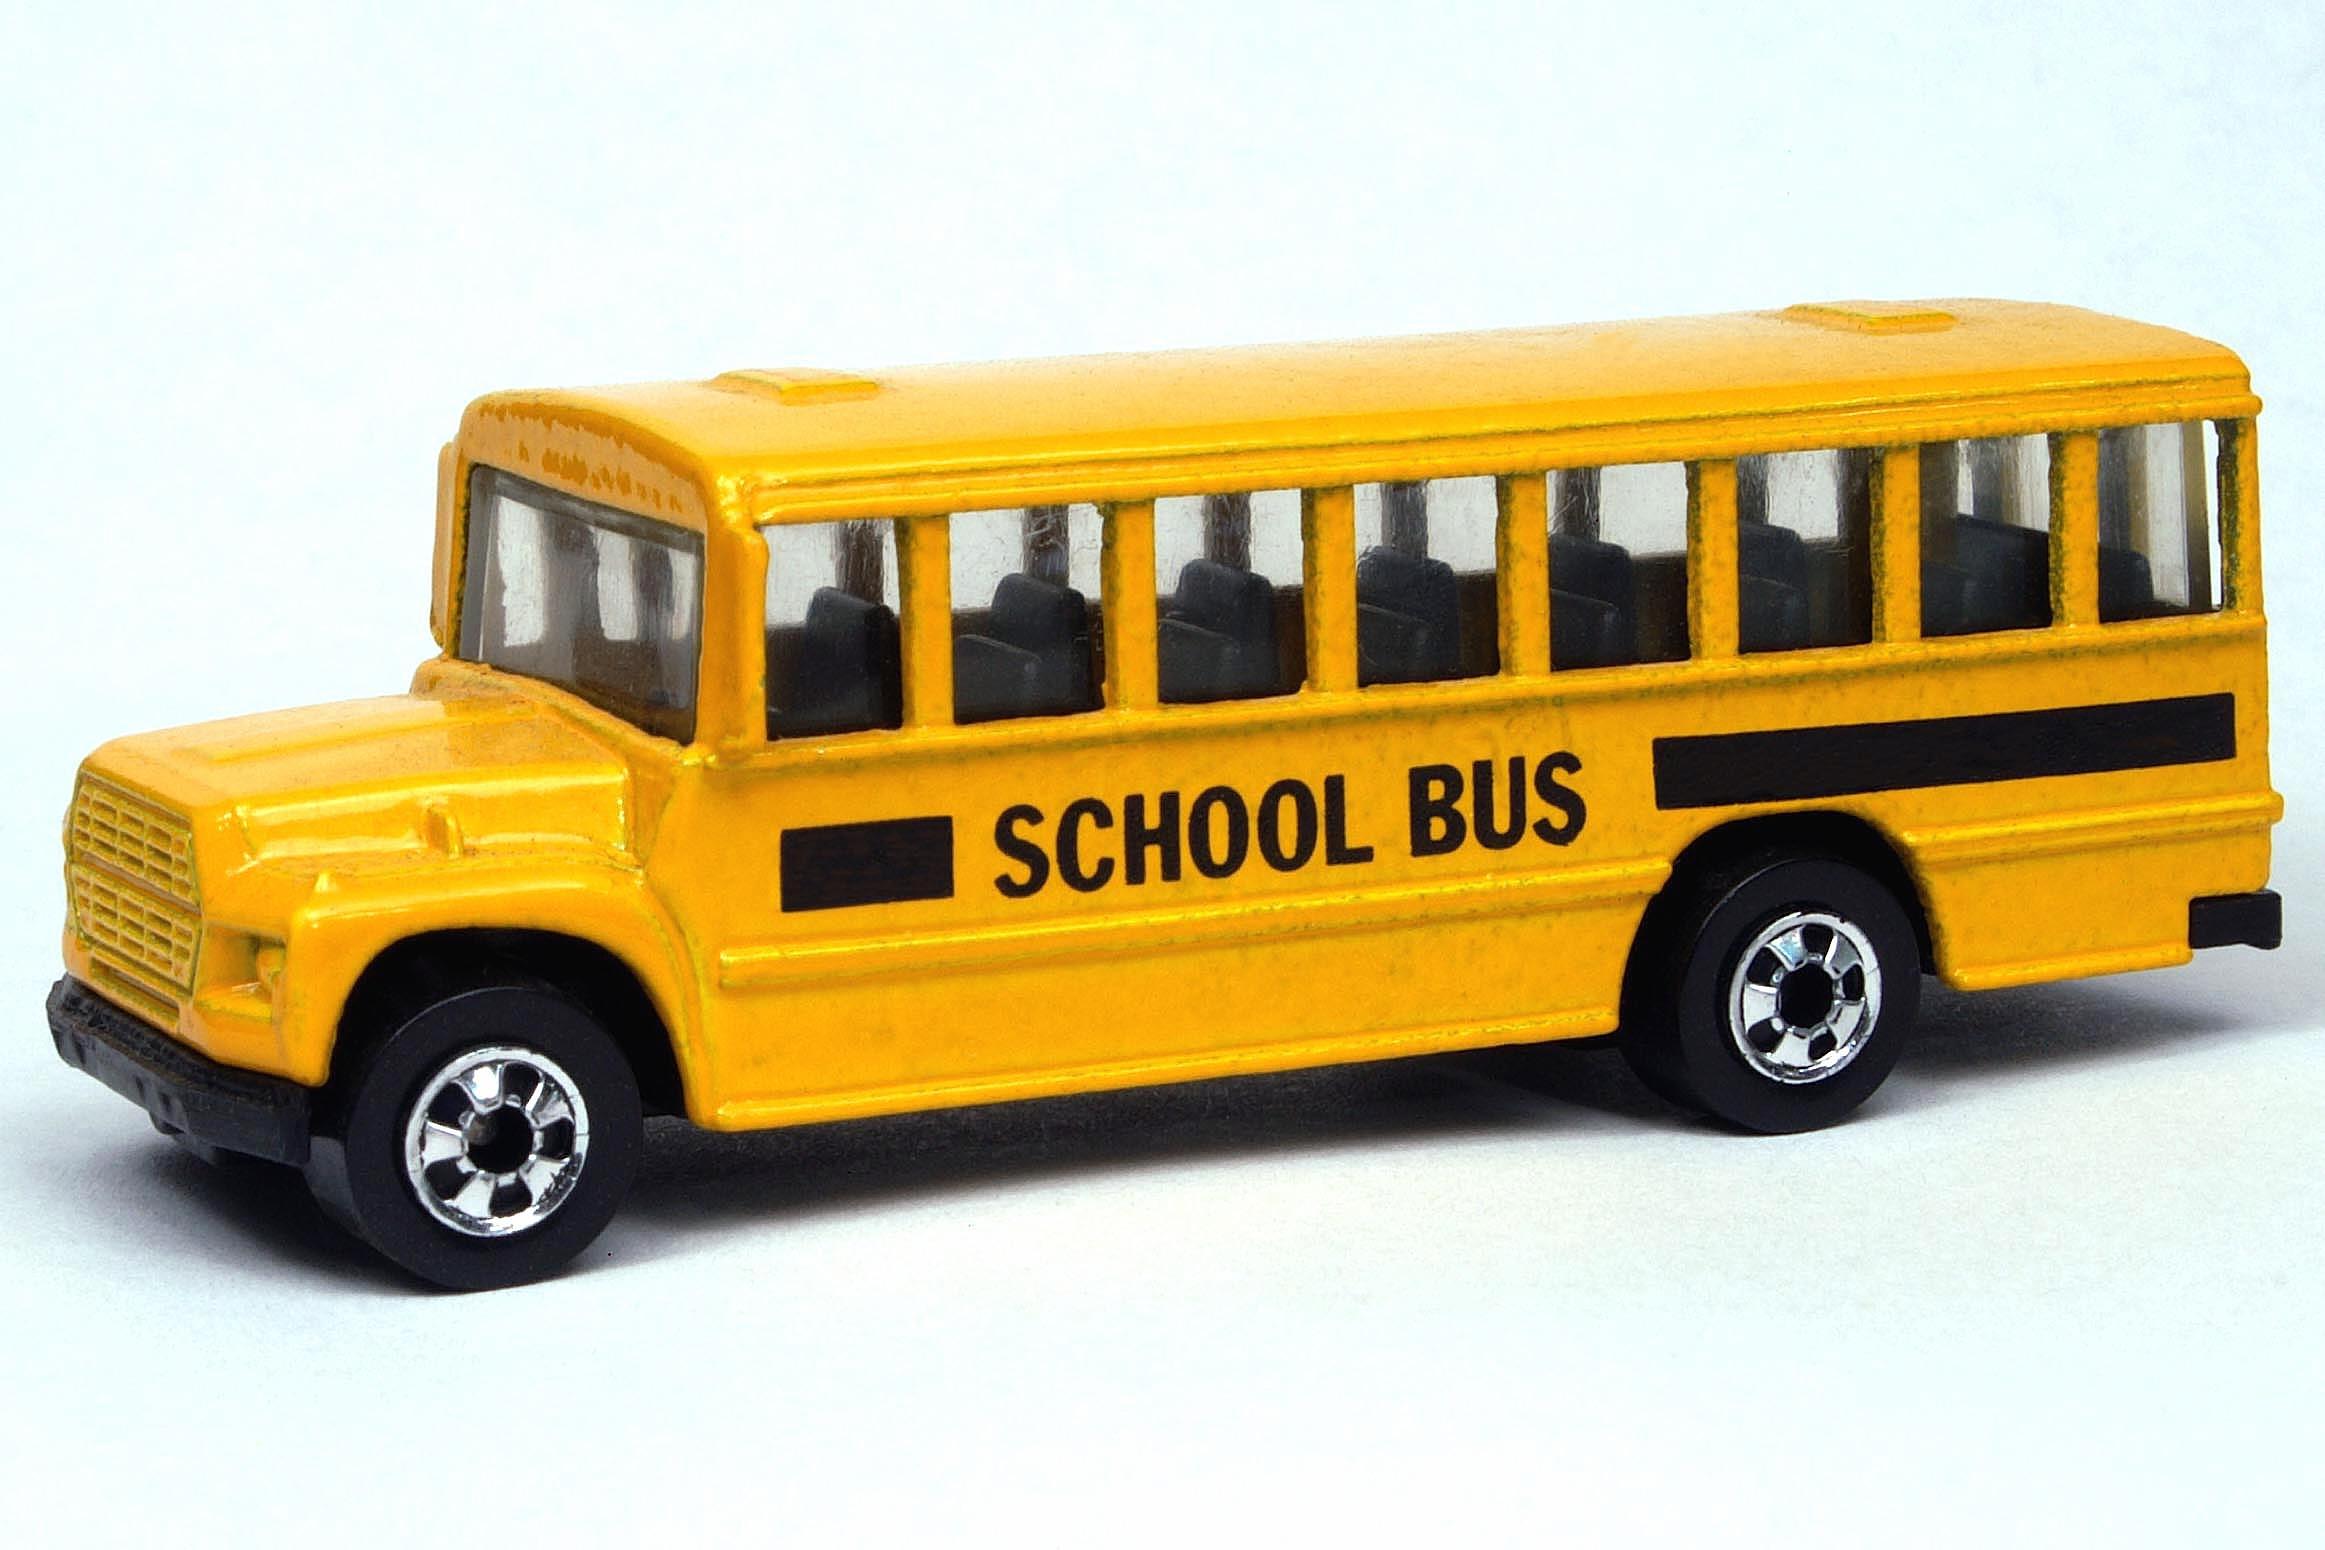 800x600px School Bus 229.17 KB